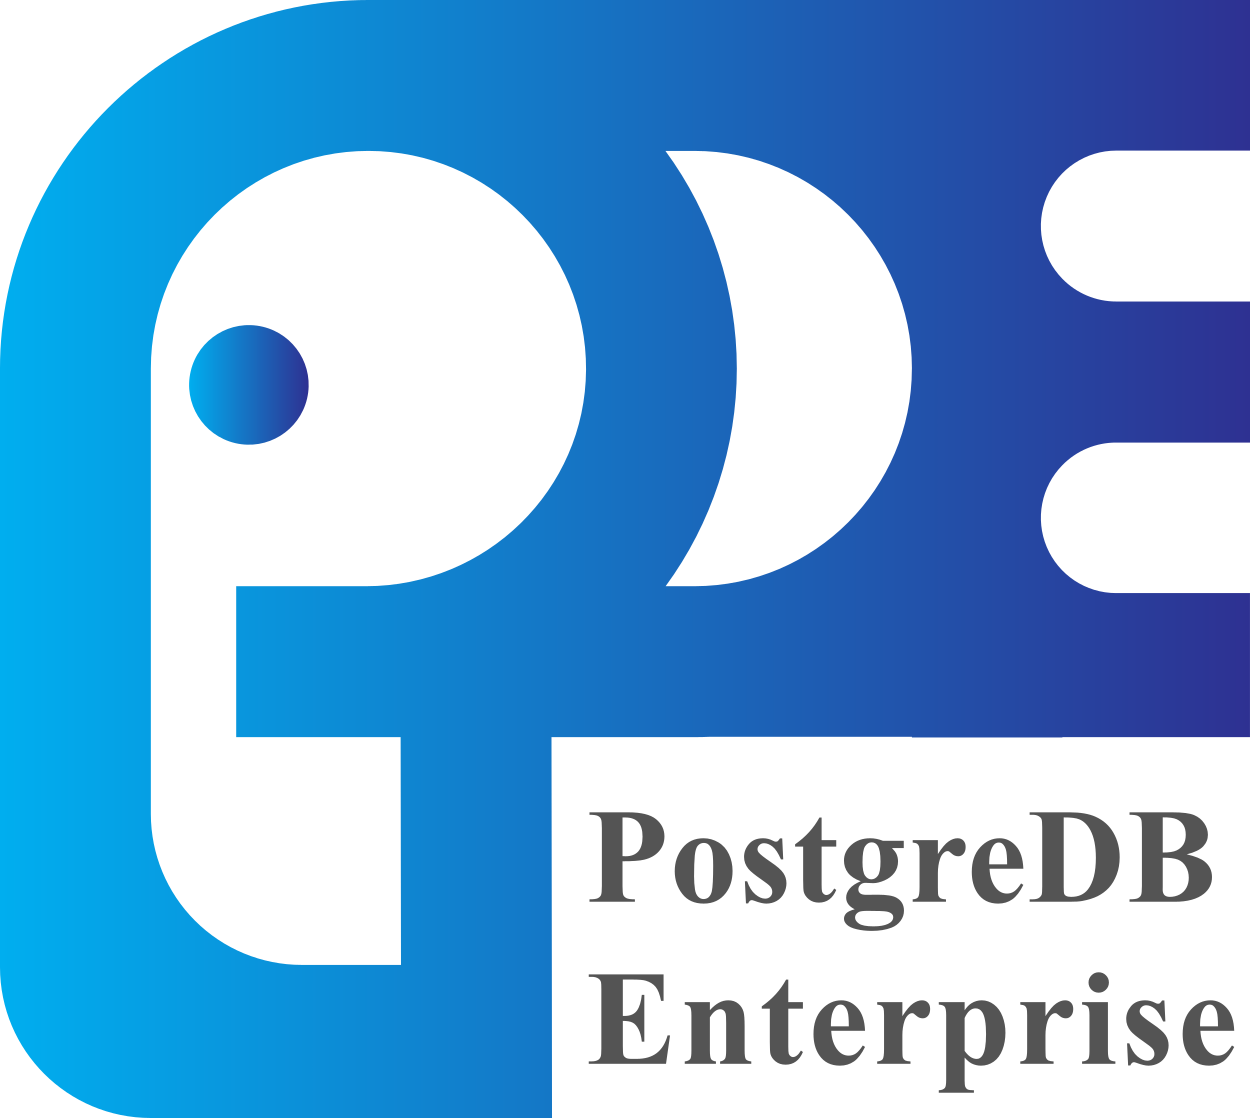 PostgreDB Enterprise